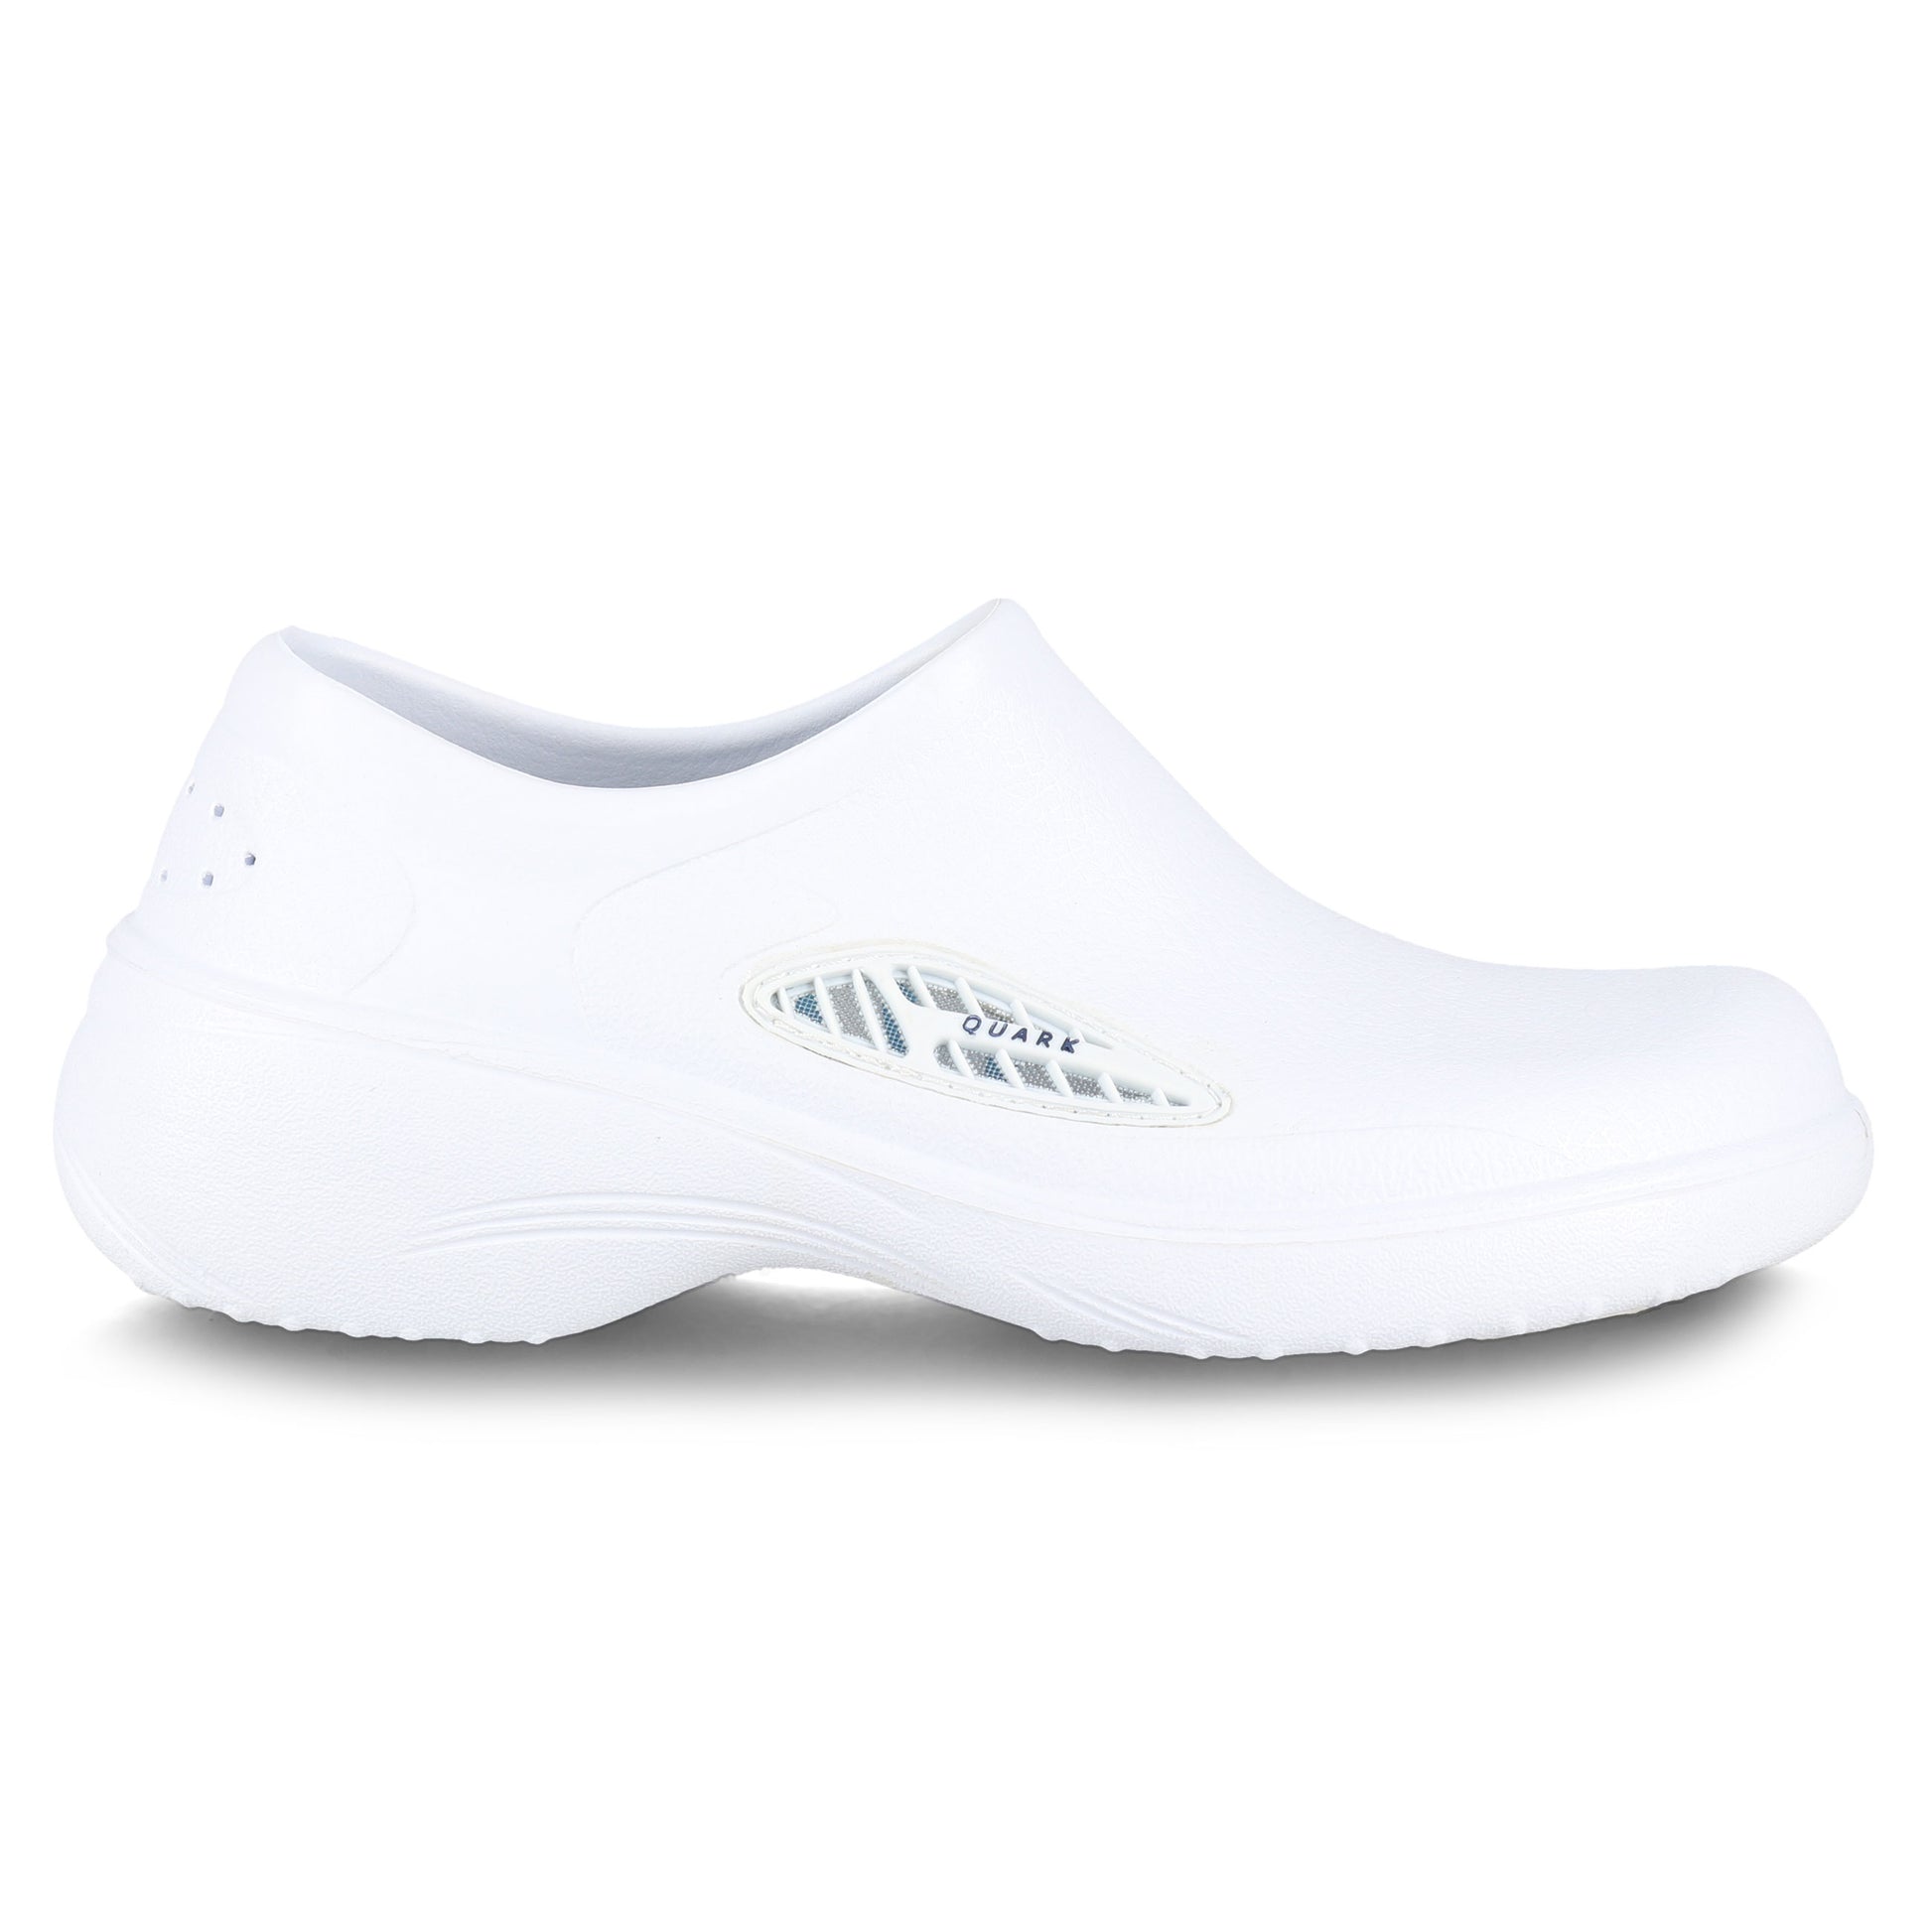 Nursemates Proair White Shoes